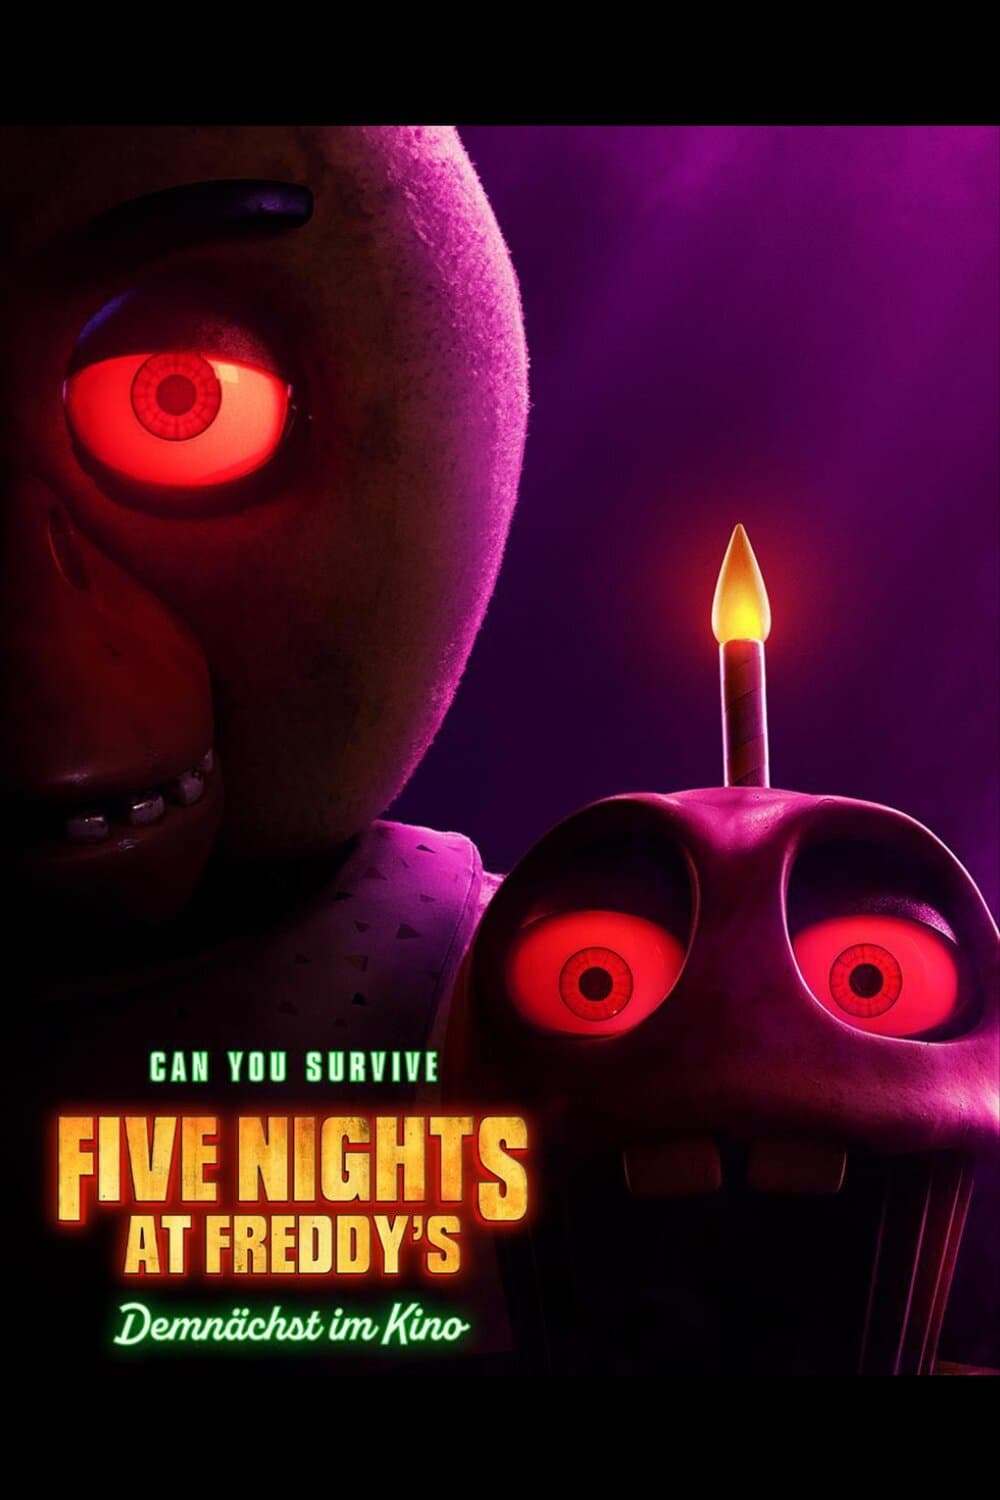 Five Nights at Freddy's: O Pesadelo Sem Fim em 2023